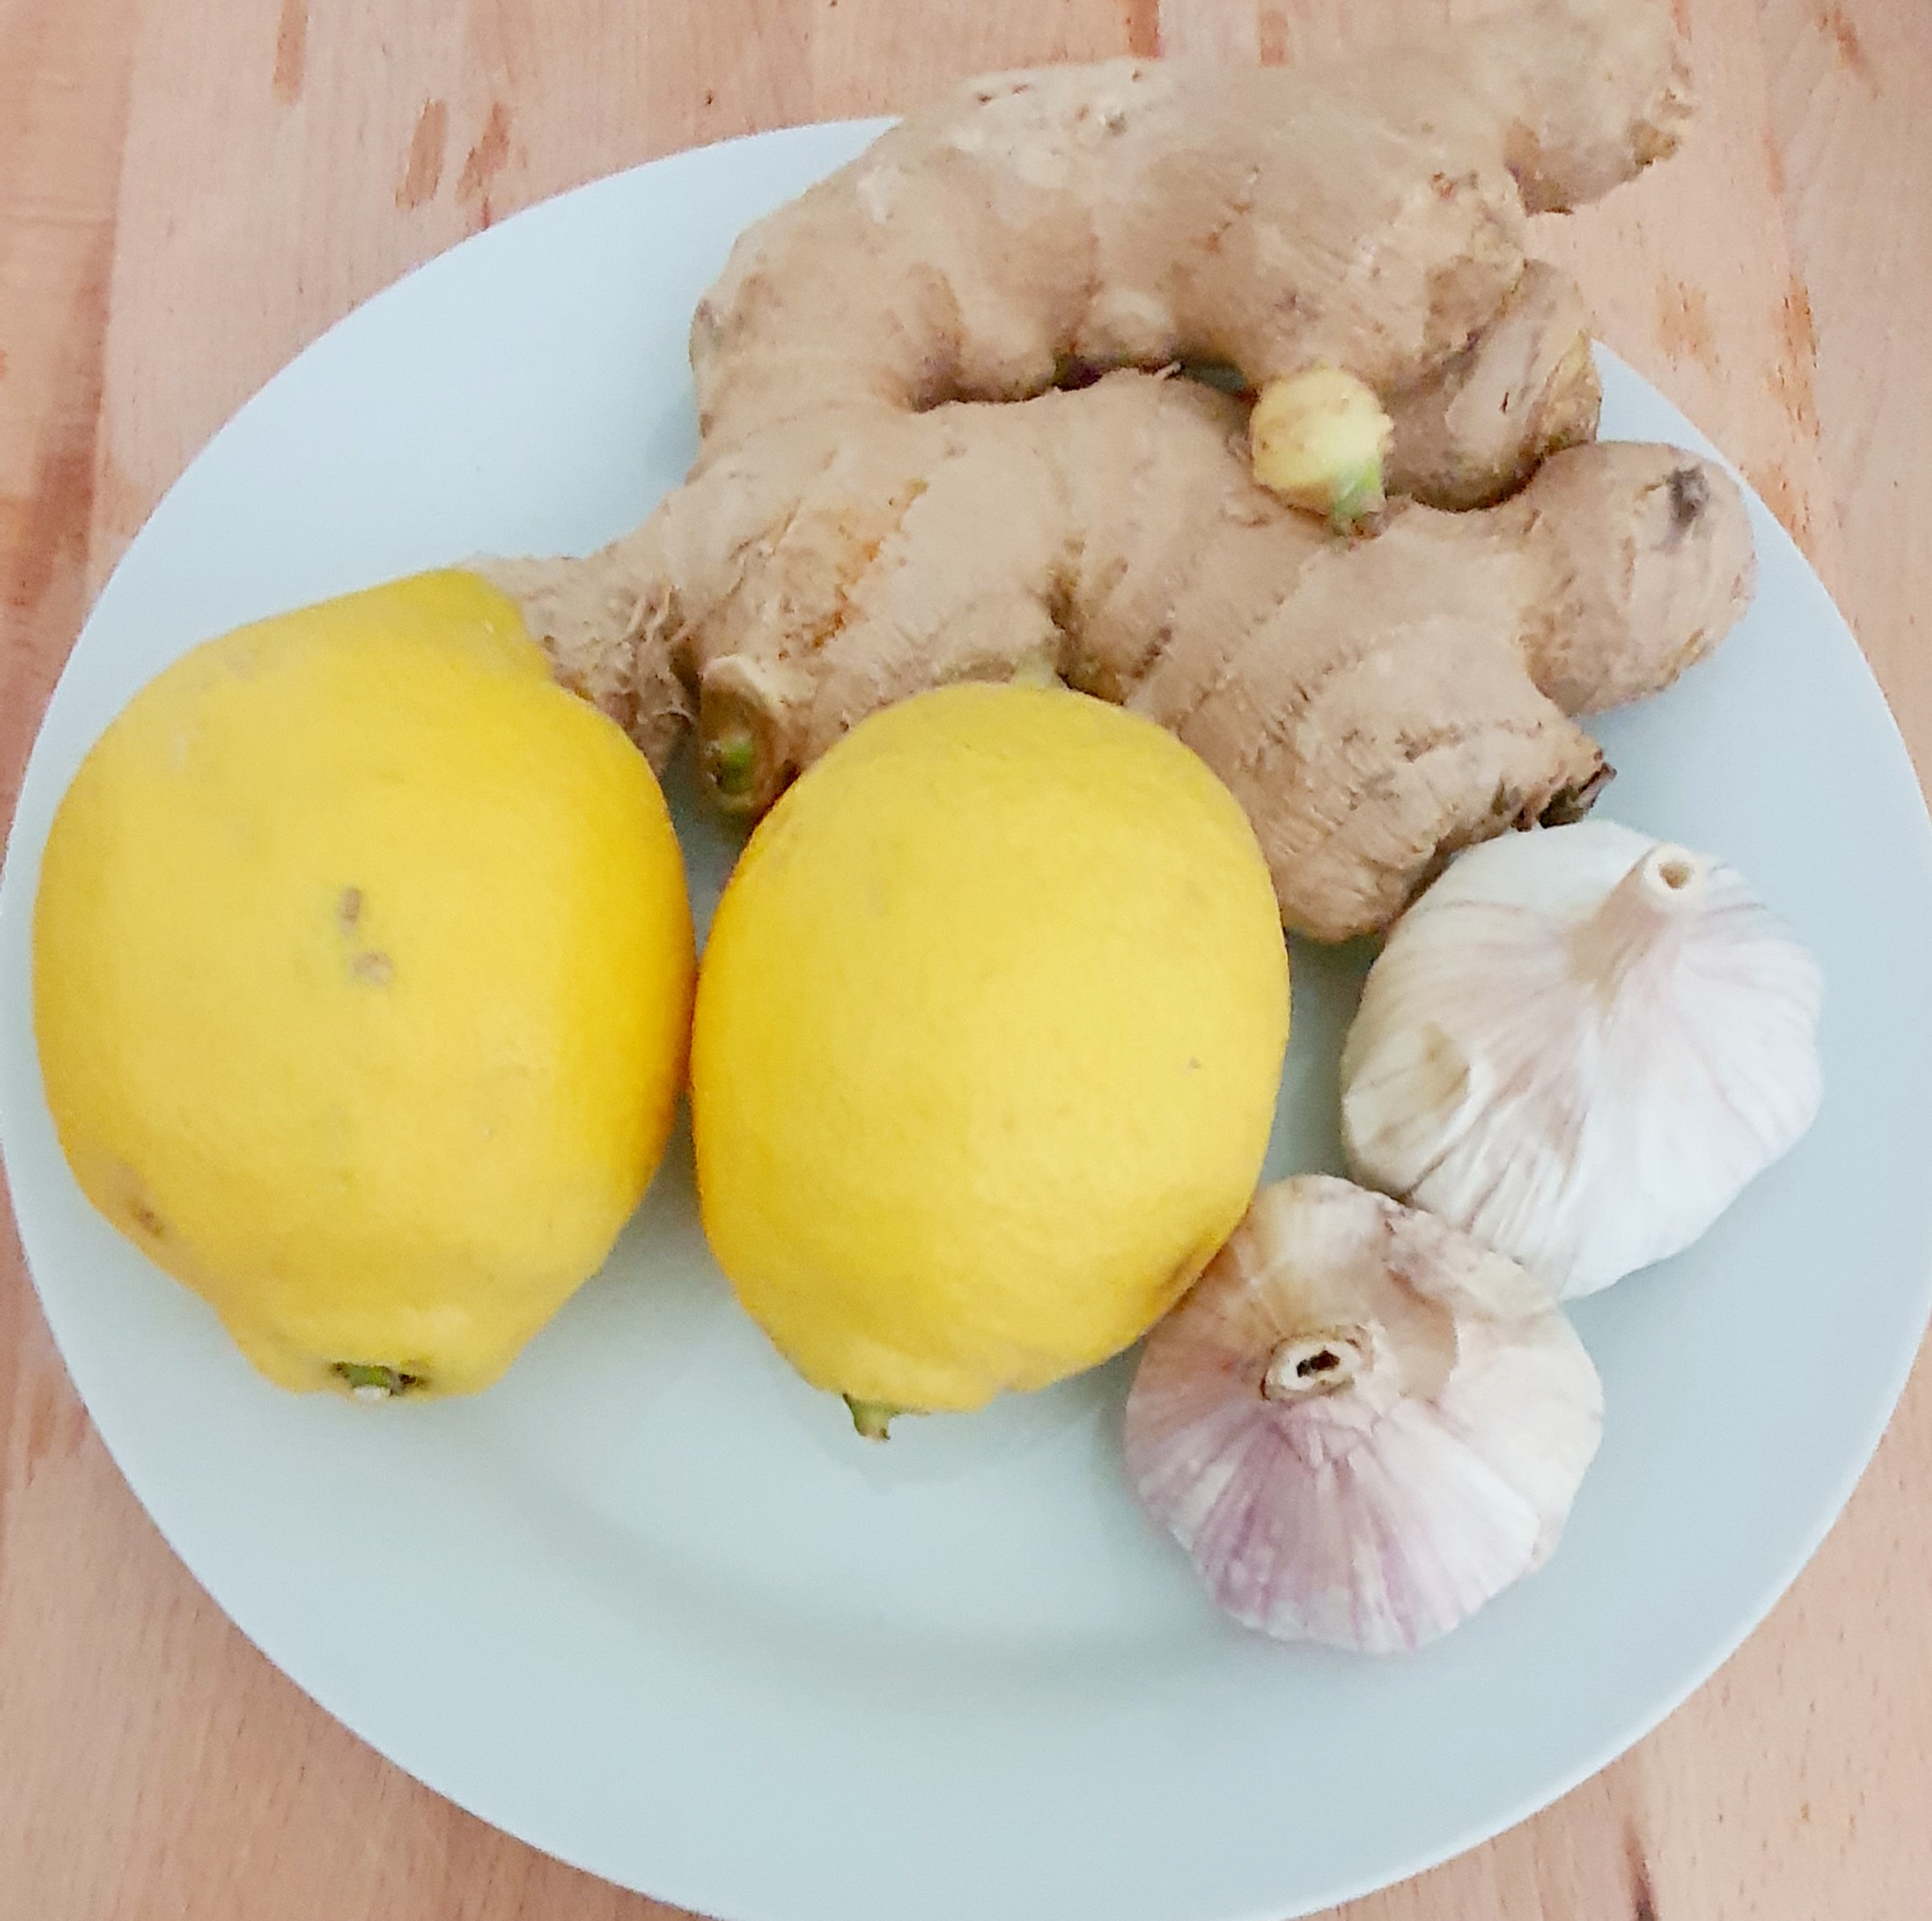 Current public health 2021; health benefits of ginger,garlic and lemon.